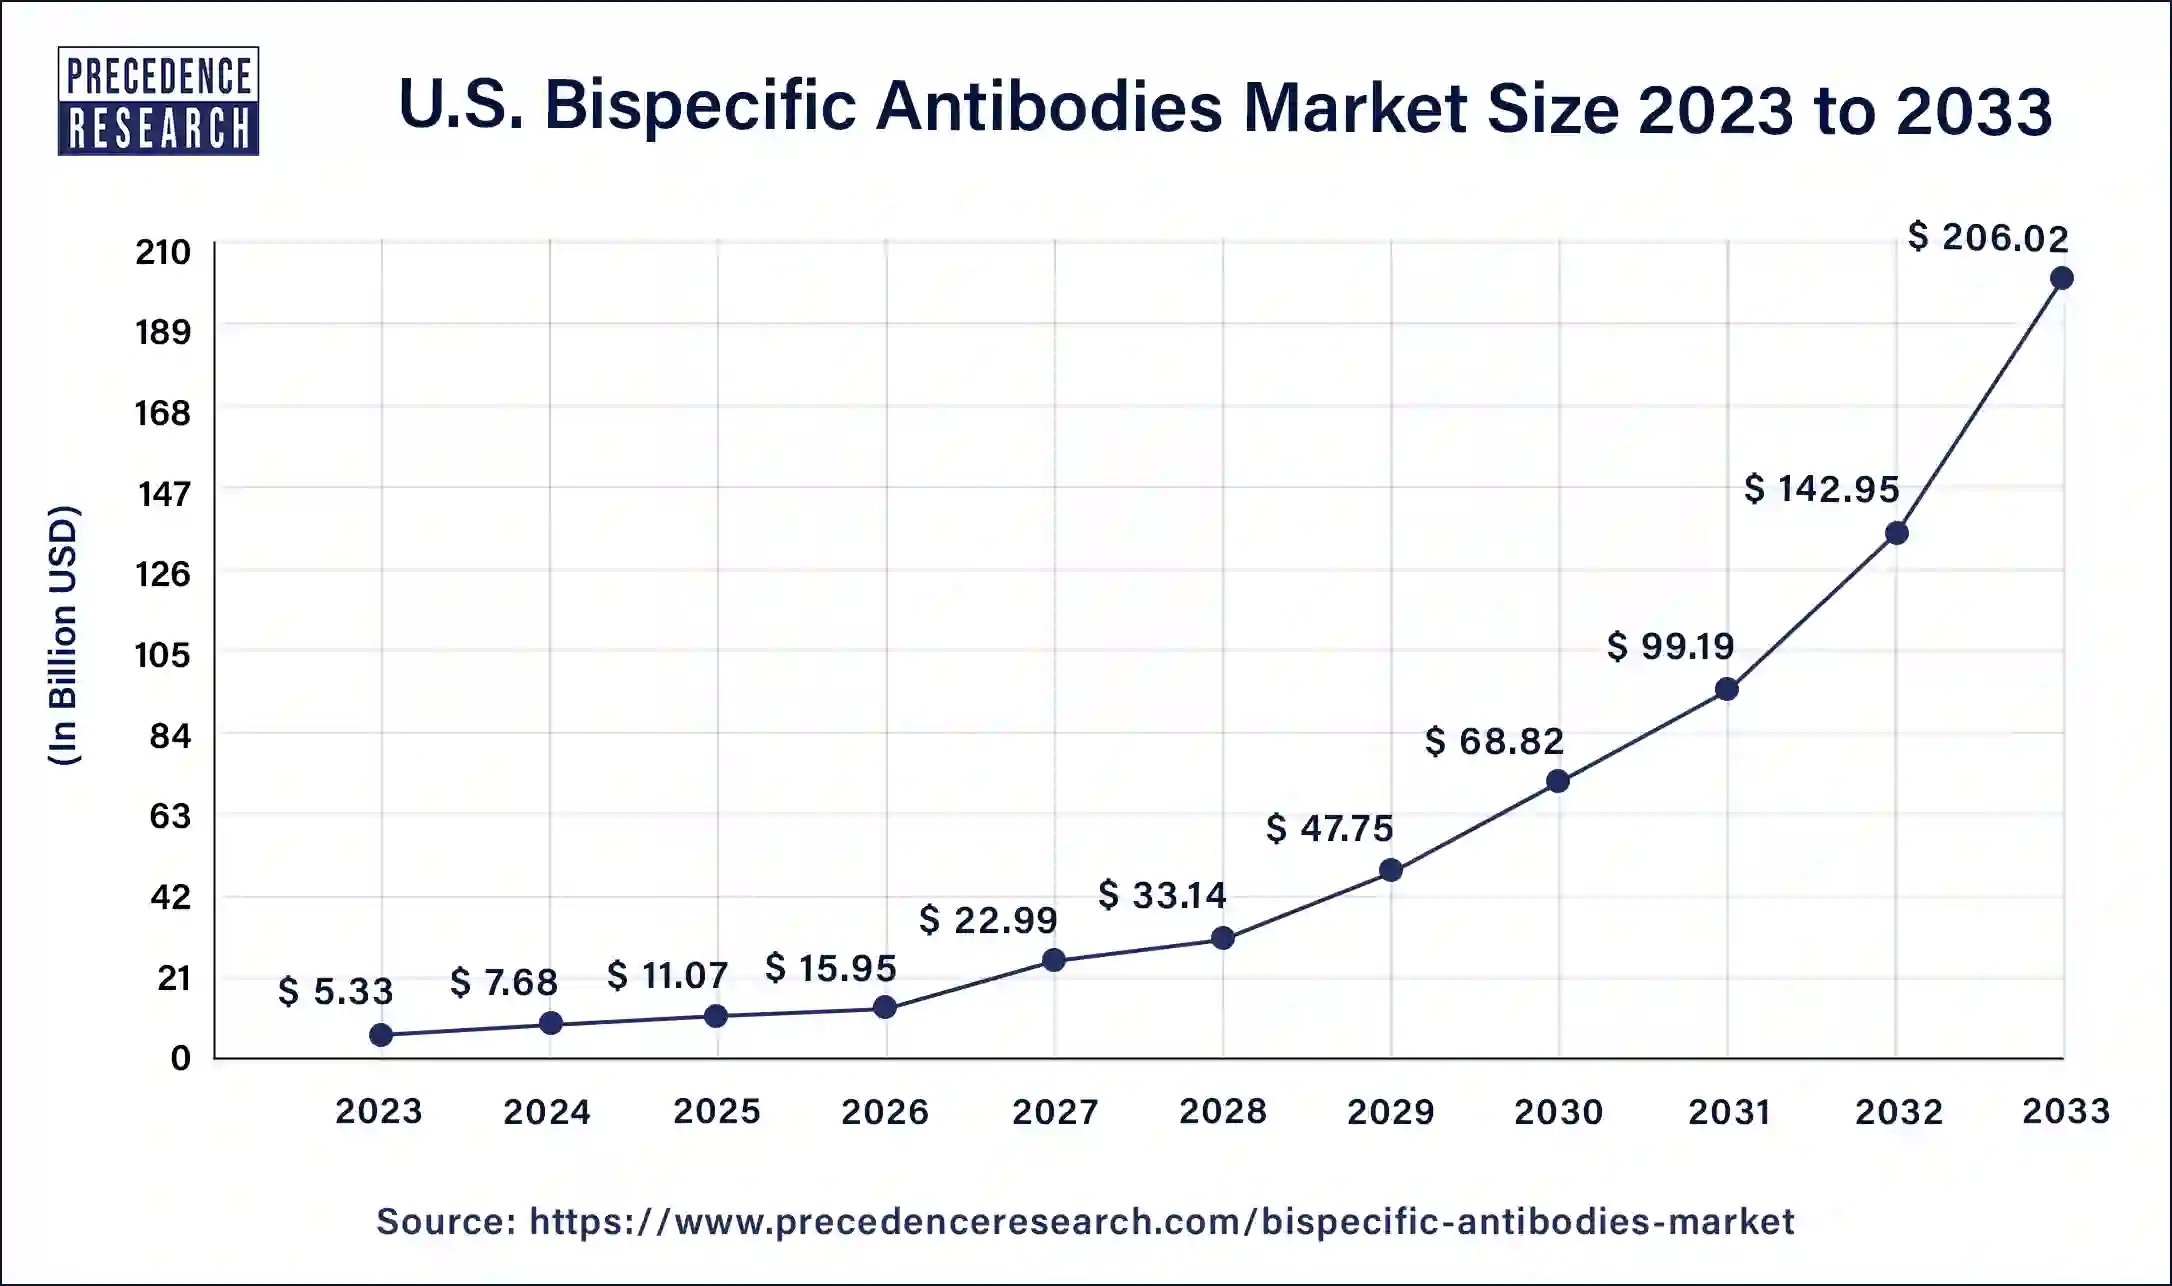 U.S. Bispecific Antibodies Market Size 2024 to 2033 